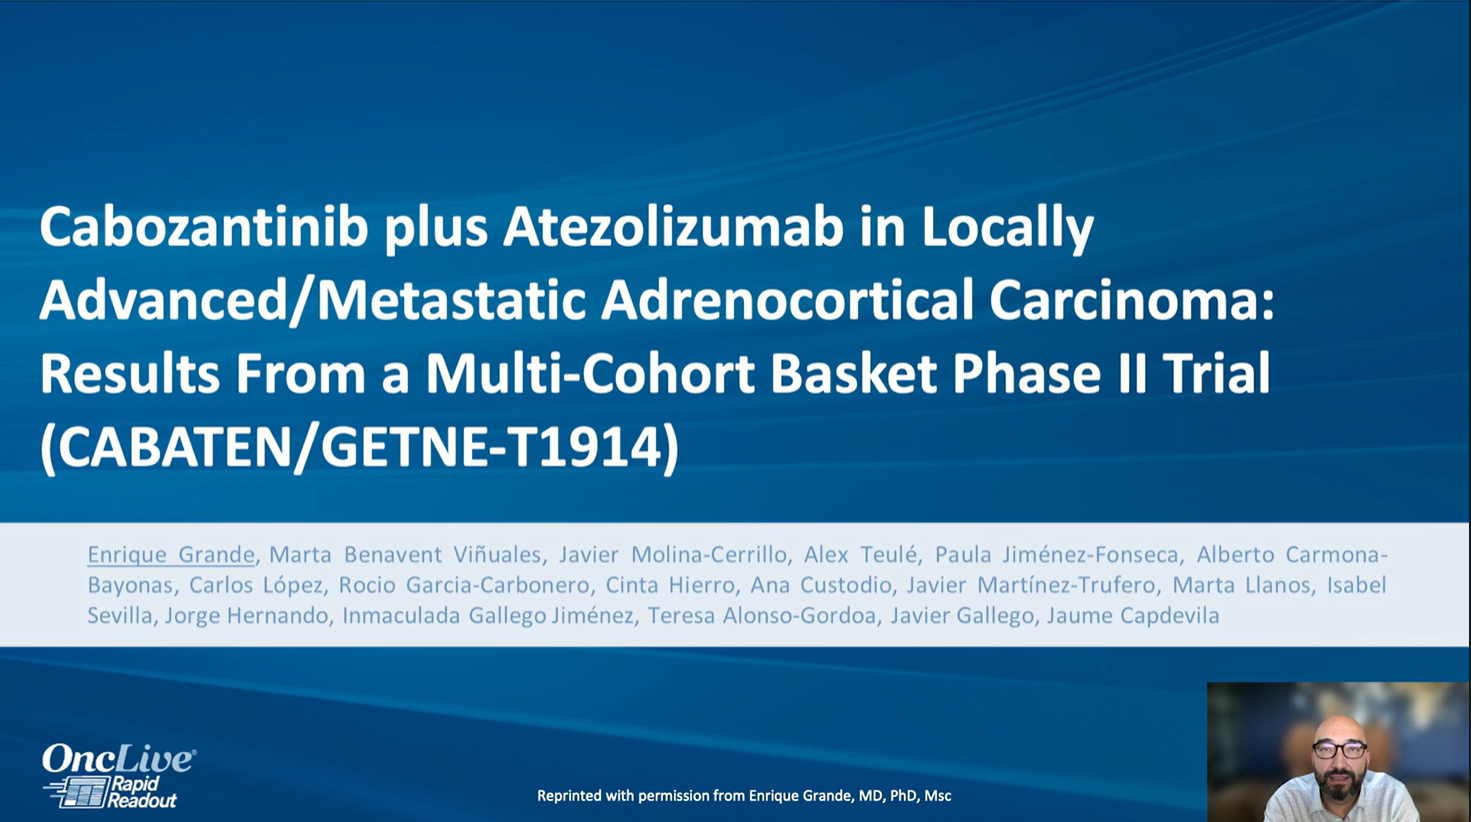 Cabozantinib plus Atezolizumab in Locally Advanced/Metastatic Adrenocortical Carcinoma: Results From a Multi-Cohort Basket Phase II Trial (CABATEN/GETNE-T1914)